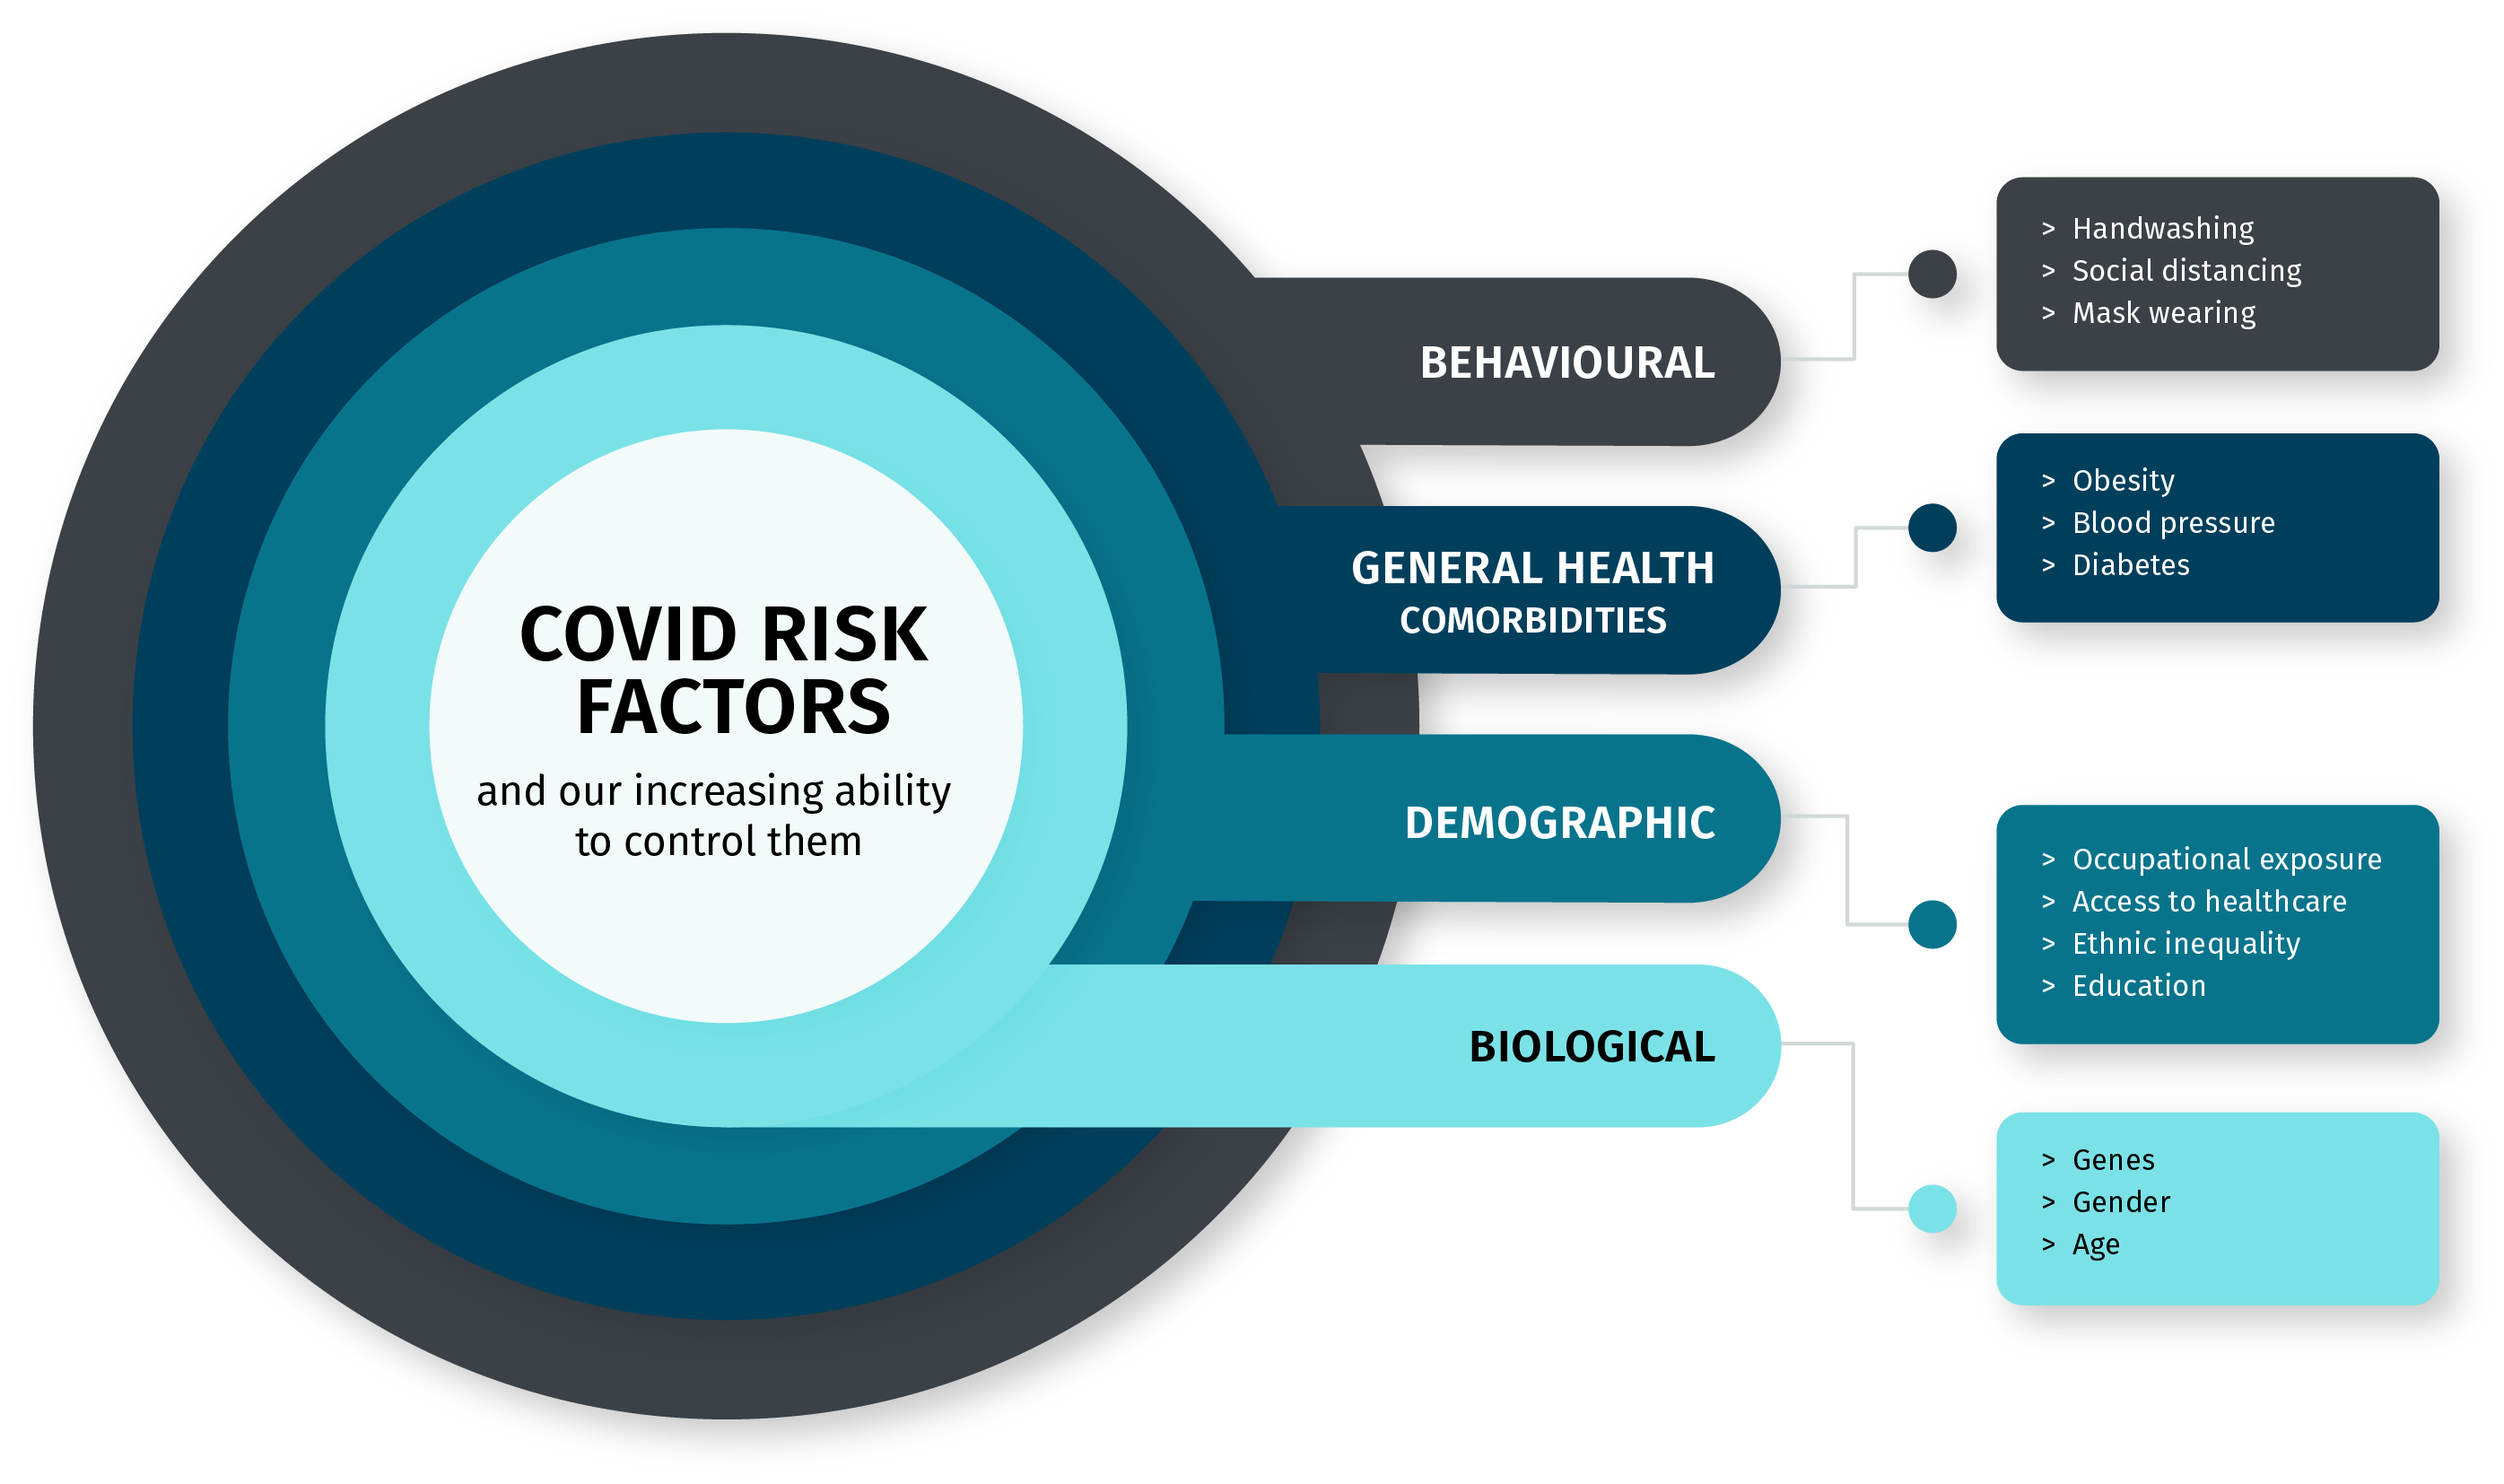 COVID-19 risk factors